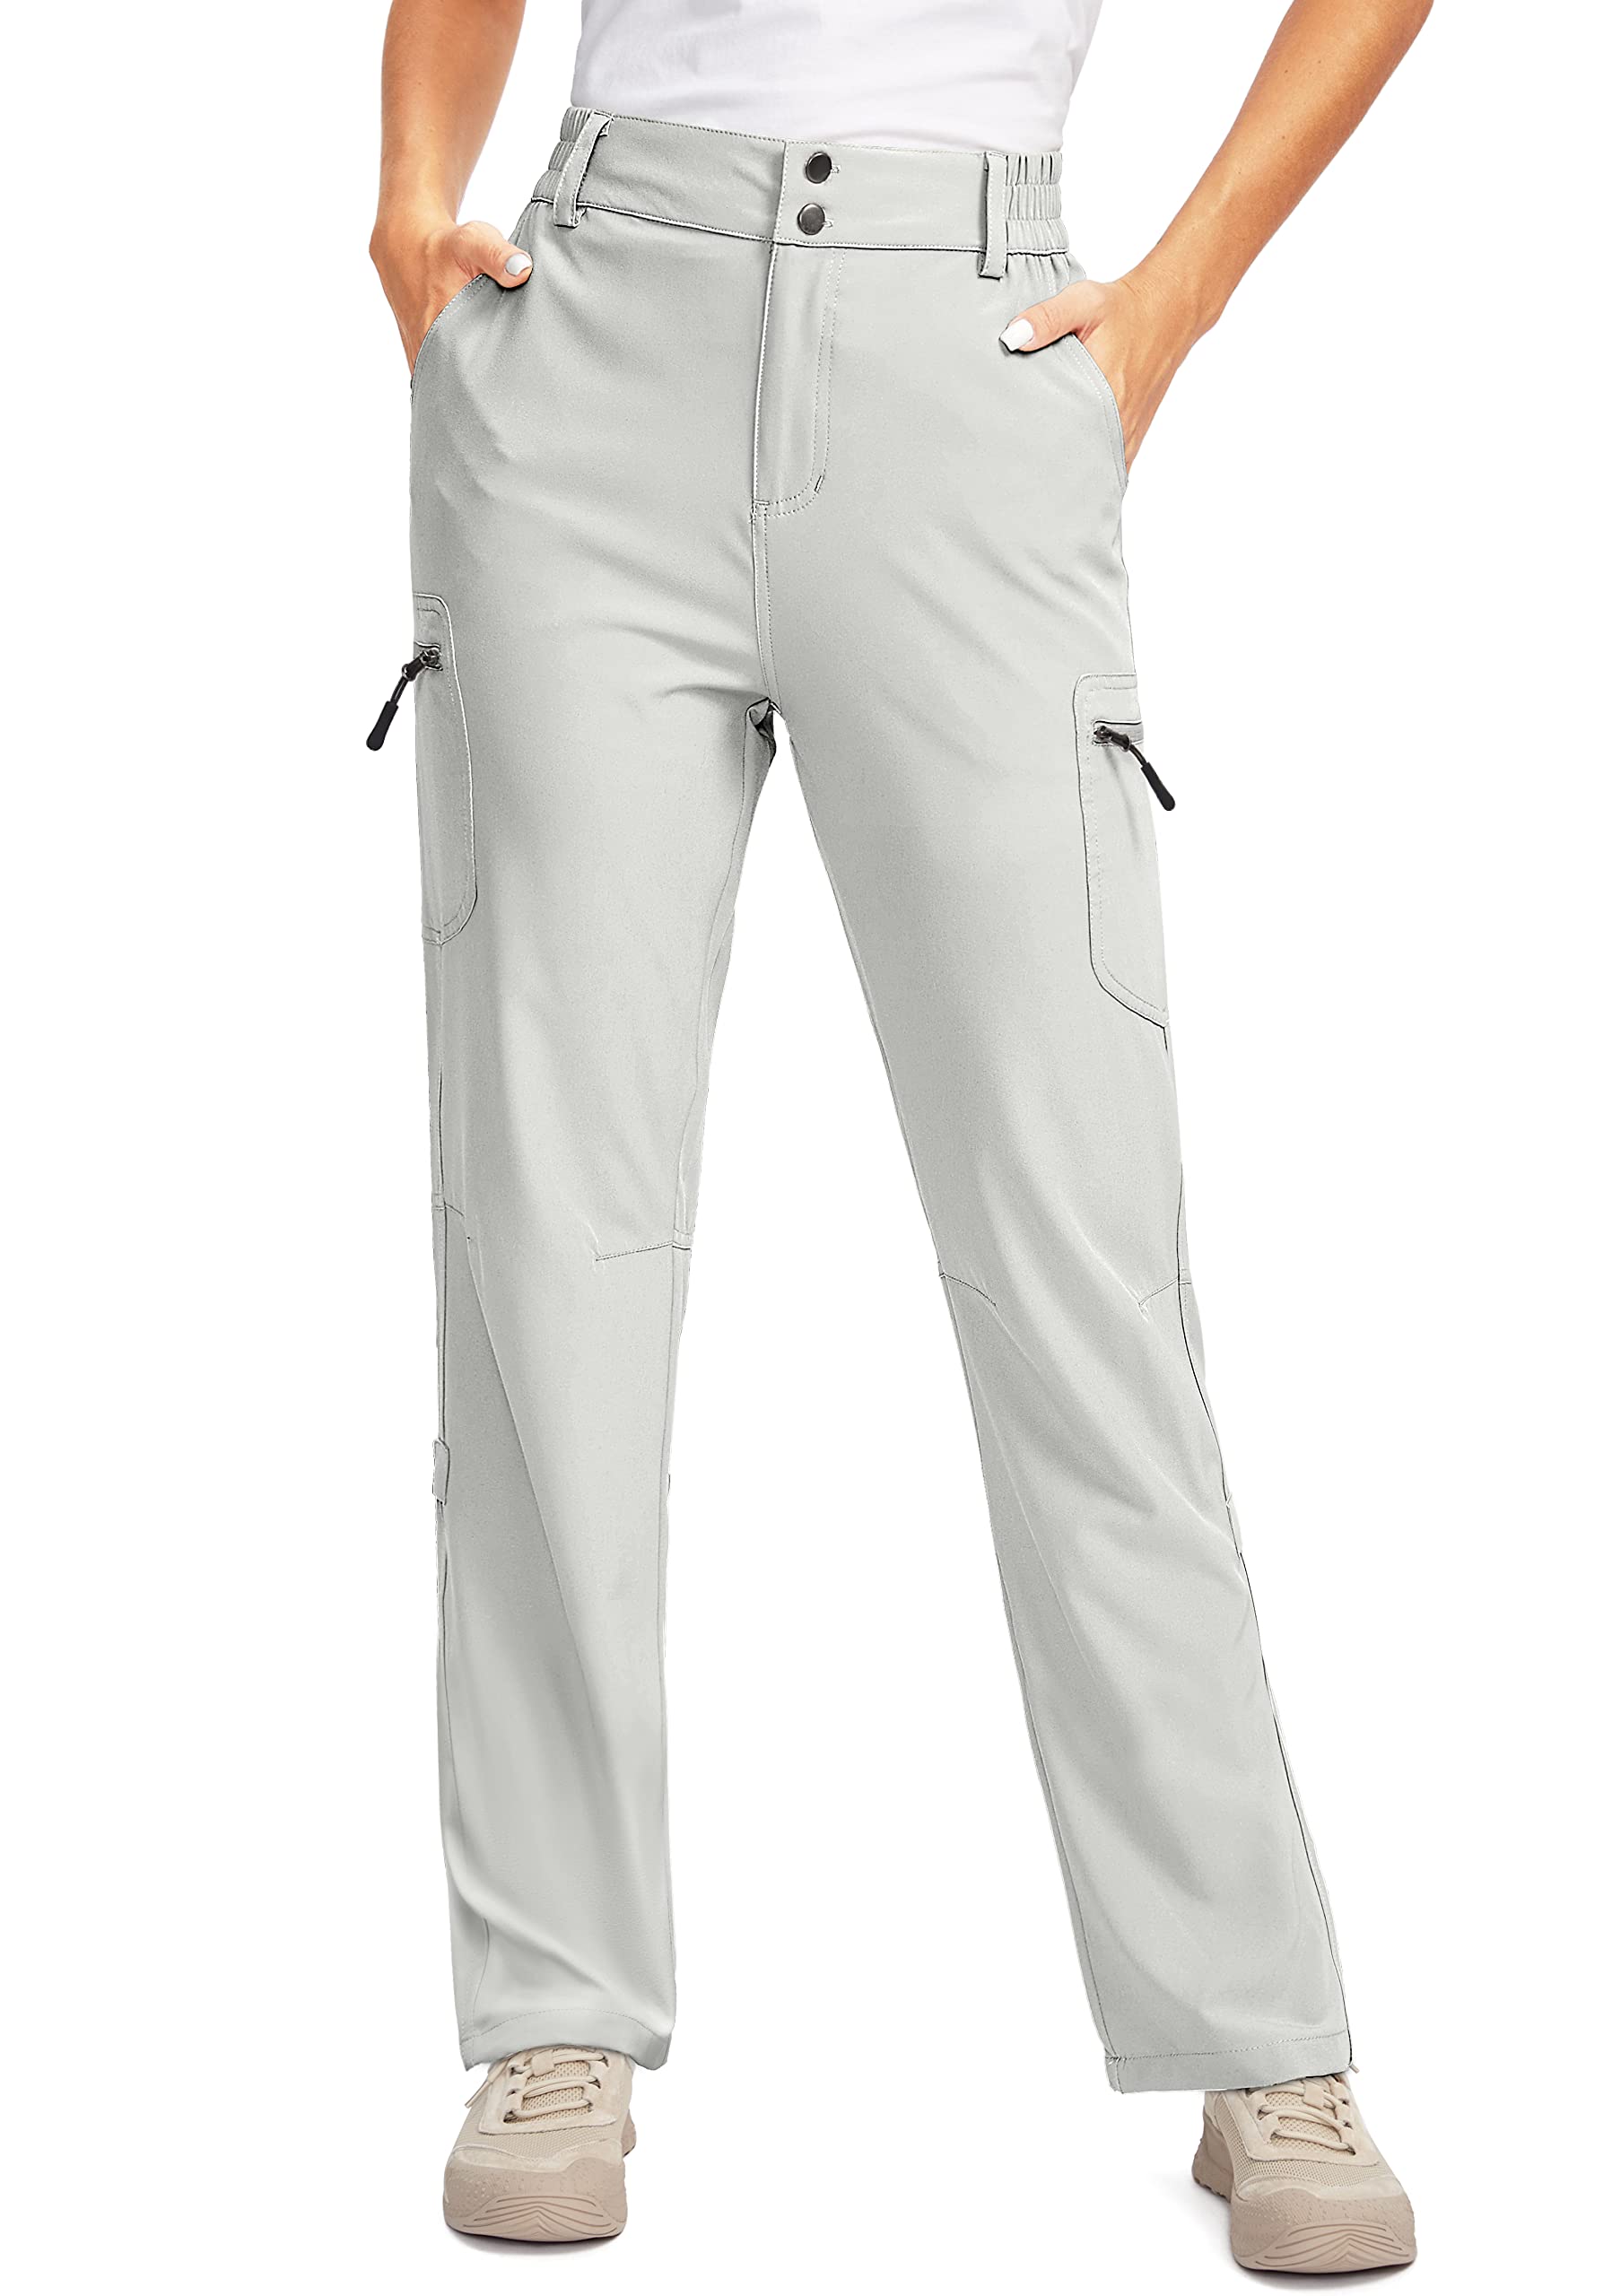 G Gradual Womens Hiking Pants With Zipper Pockets Convertible Lightweight Quick Dry Stretch Cargo Camping Pants(Light Grey, M)